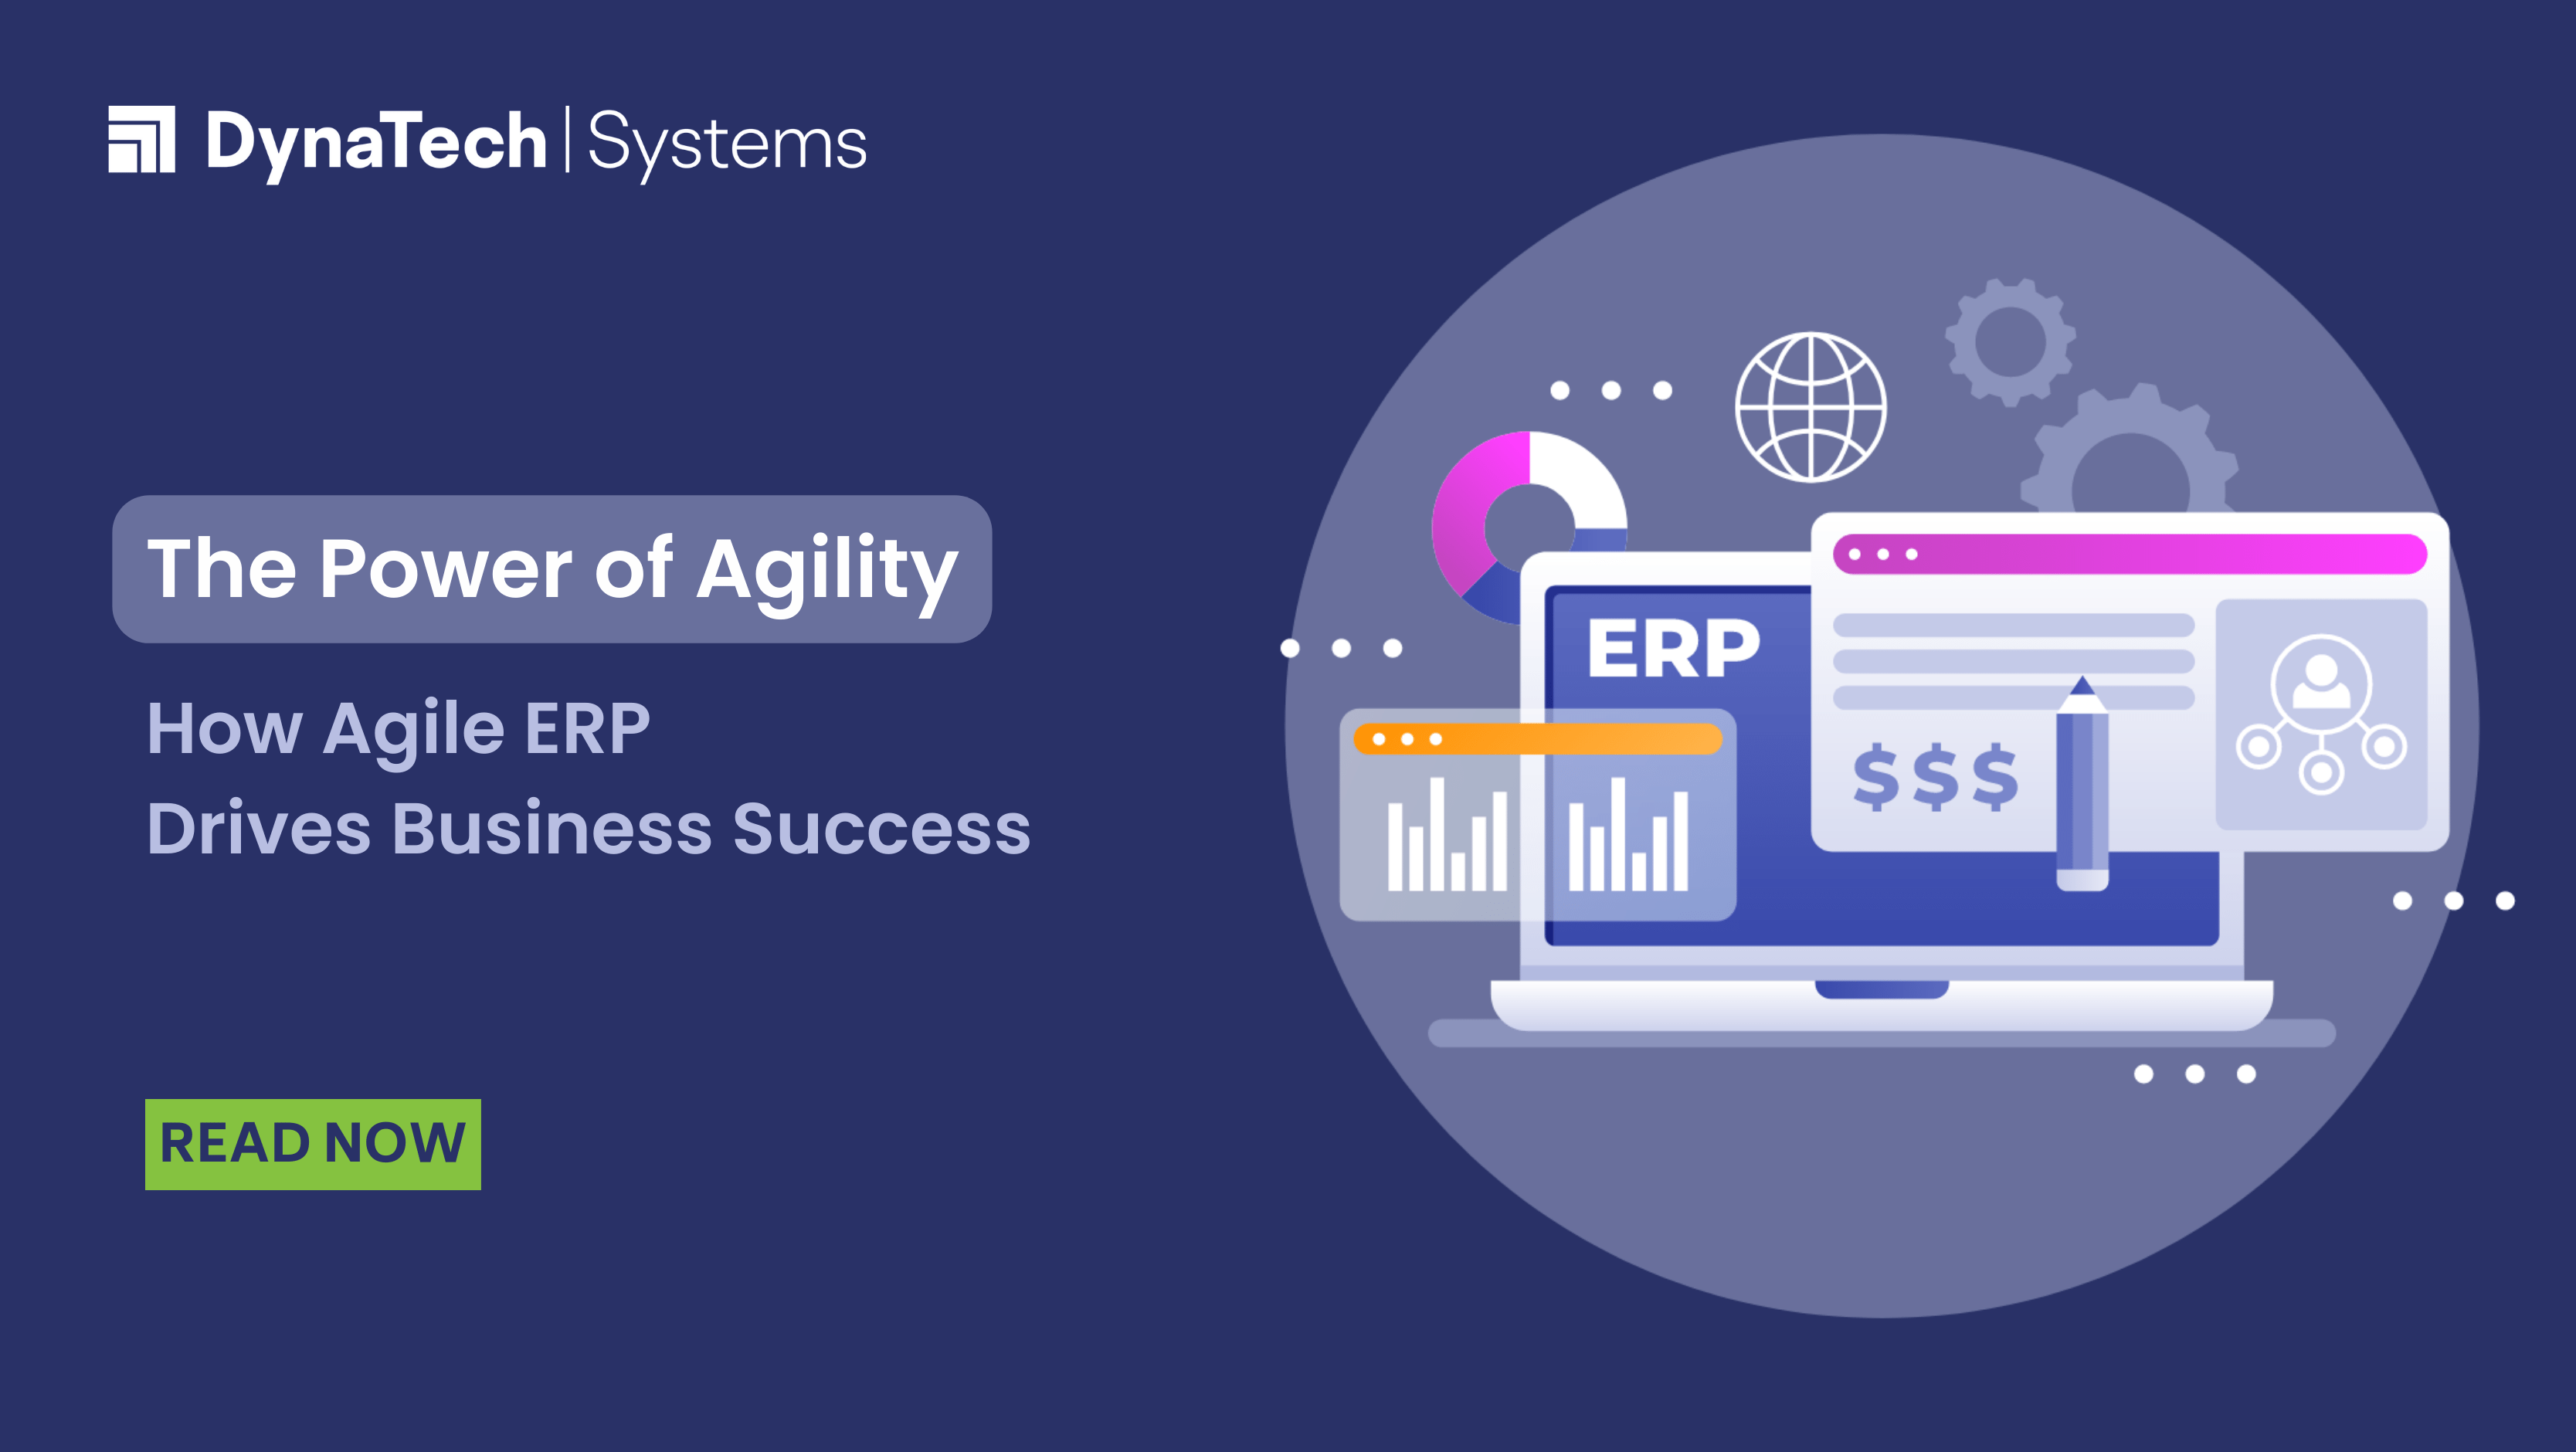 The Power of Agility: How Agile ERP Drives Business Success